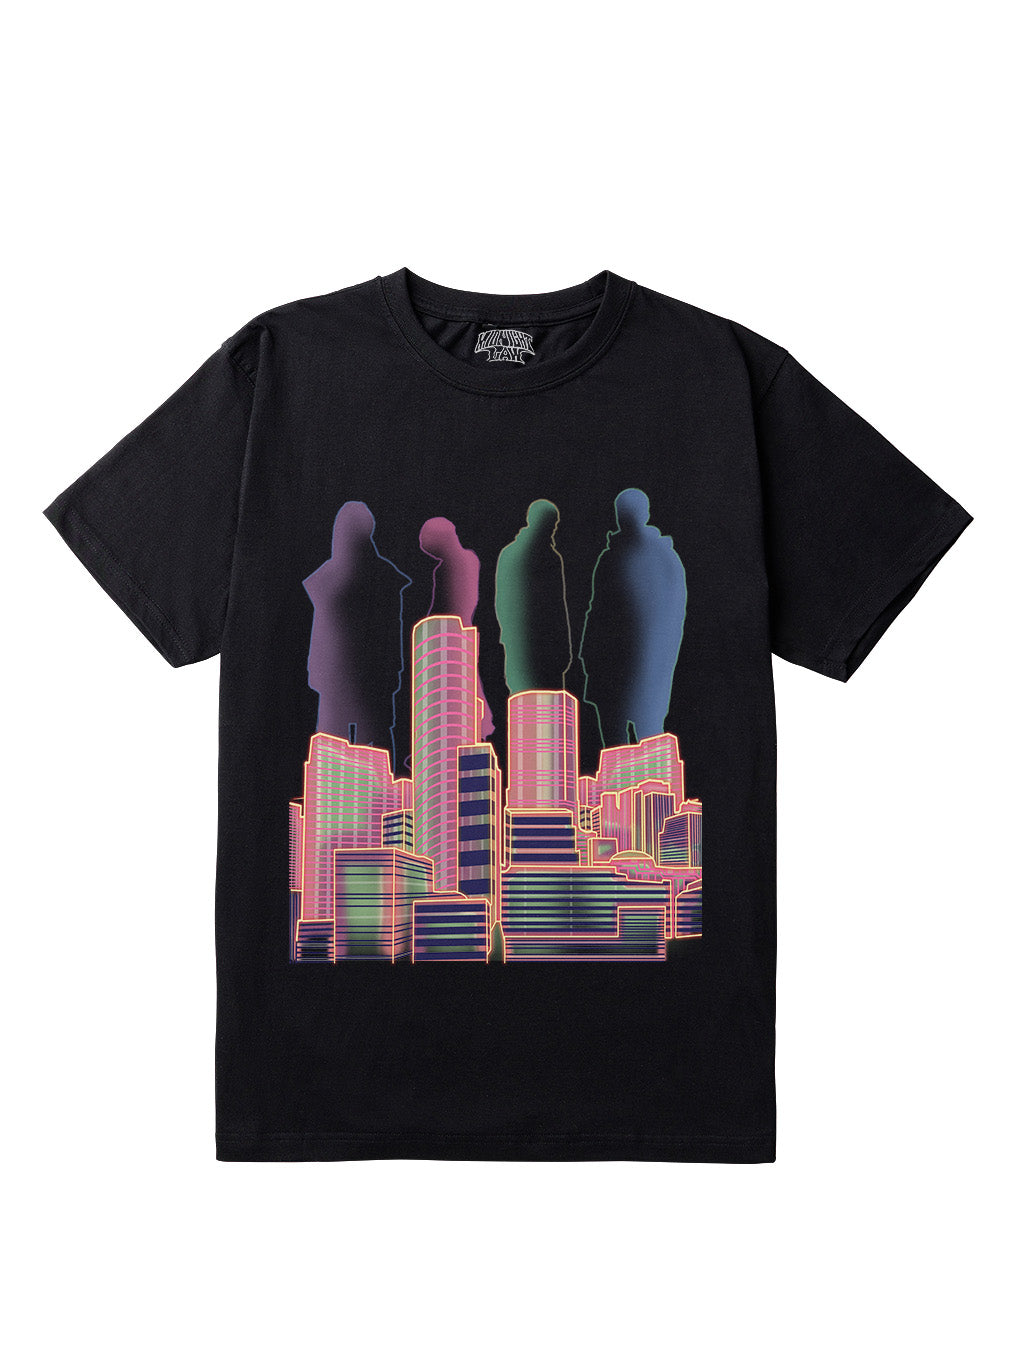 Neon Gods T-Shirt